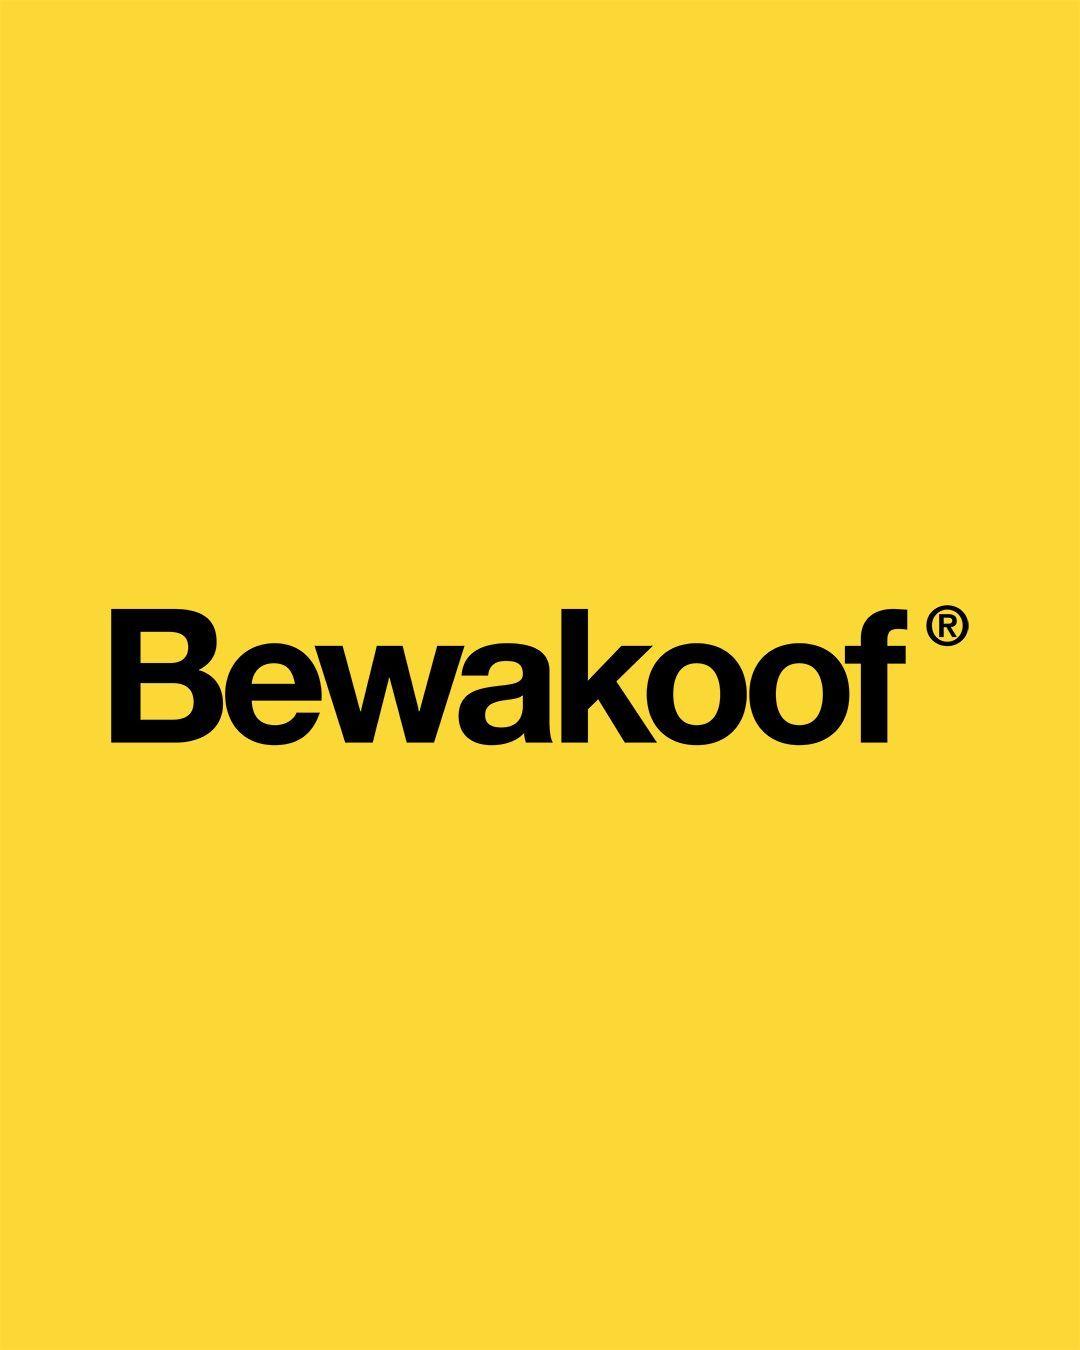 Yellow Heart Company Logo - Bewakoof.com. Bewakoof Logo. Company logo, Logos, Unique names